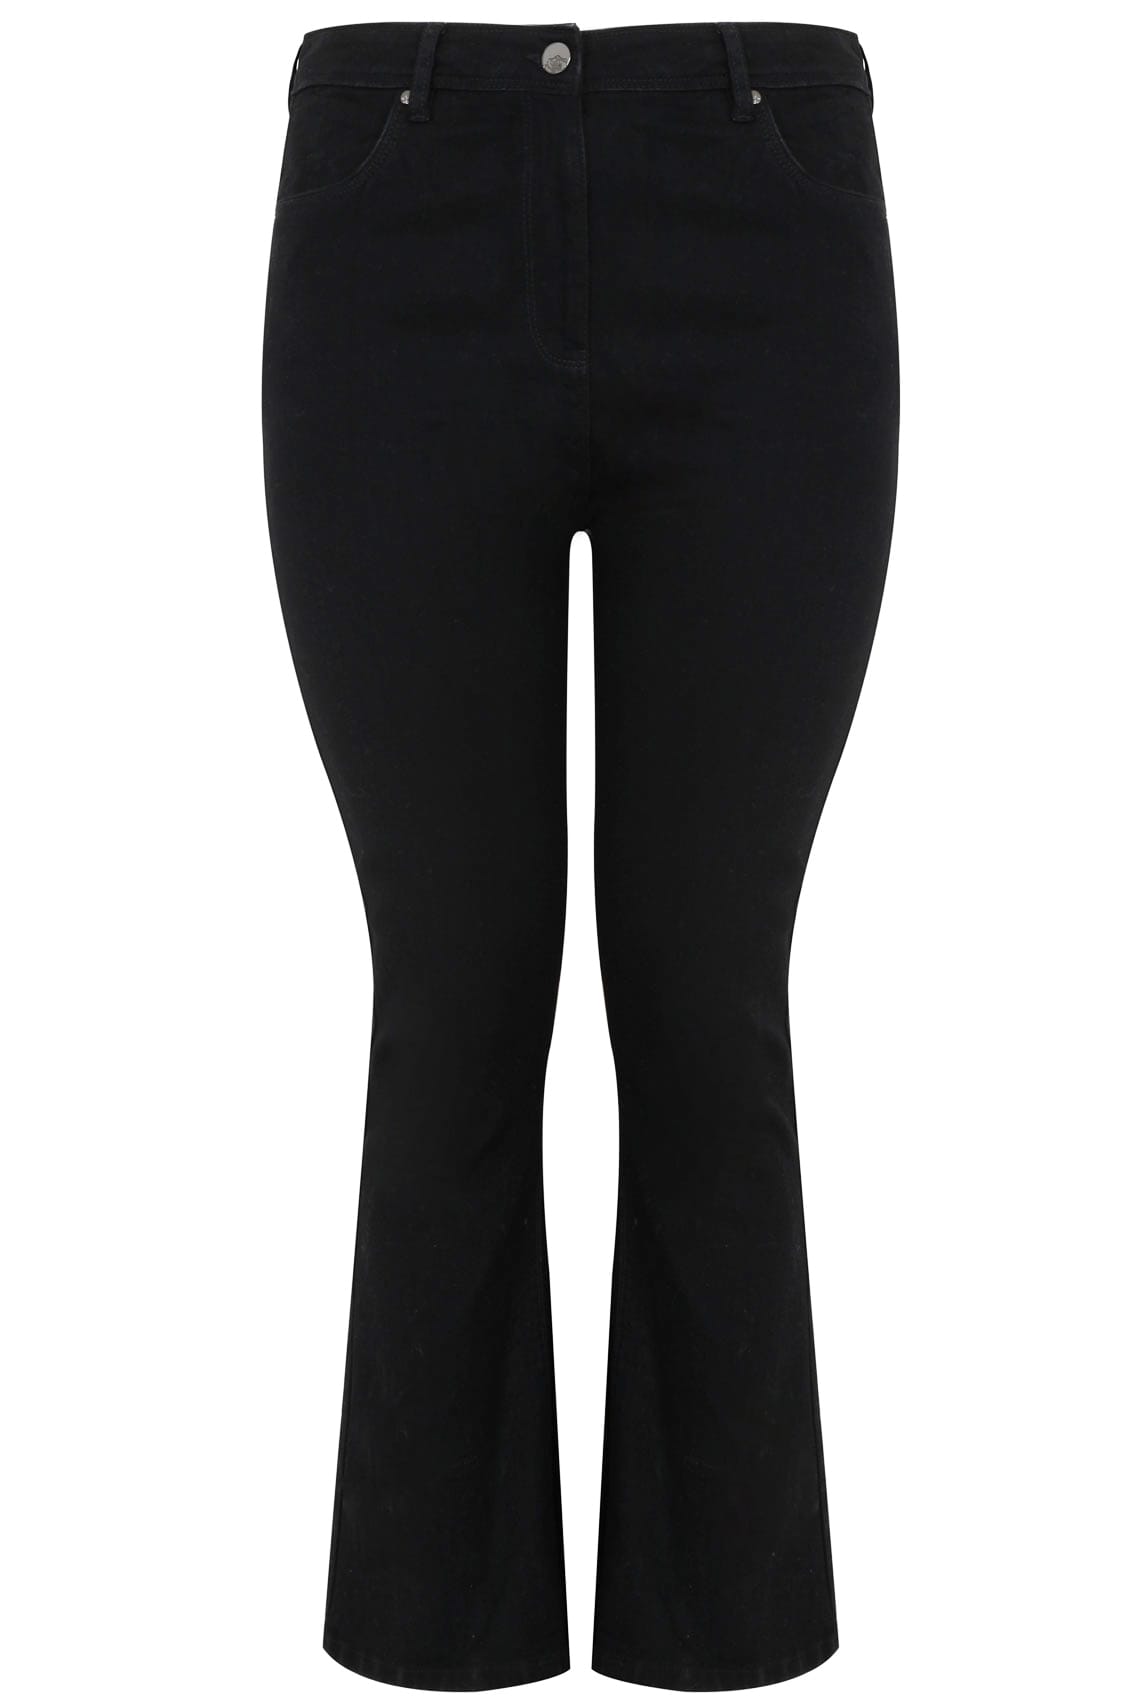 Black Bootcut SHAPER Jeans Plus Size 16 to 28